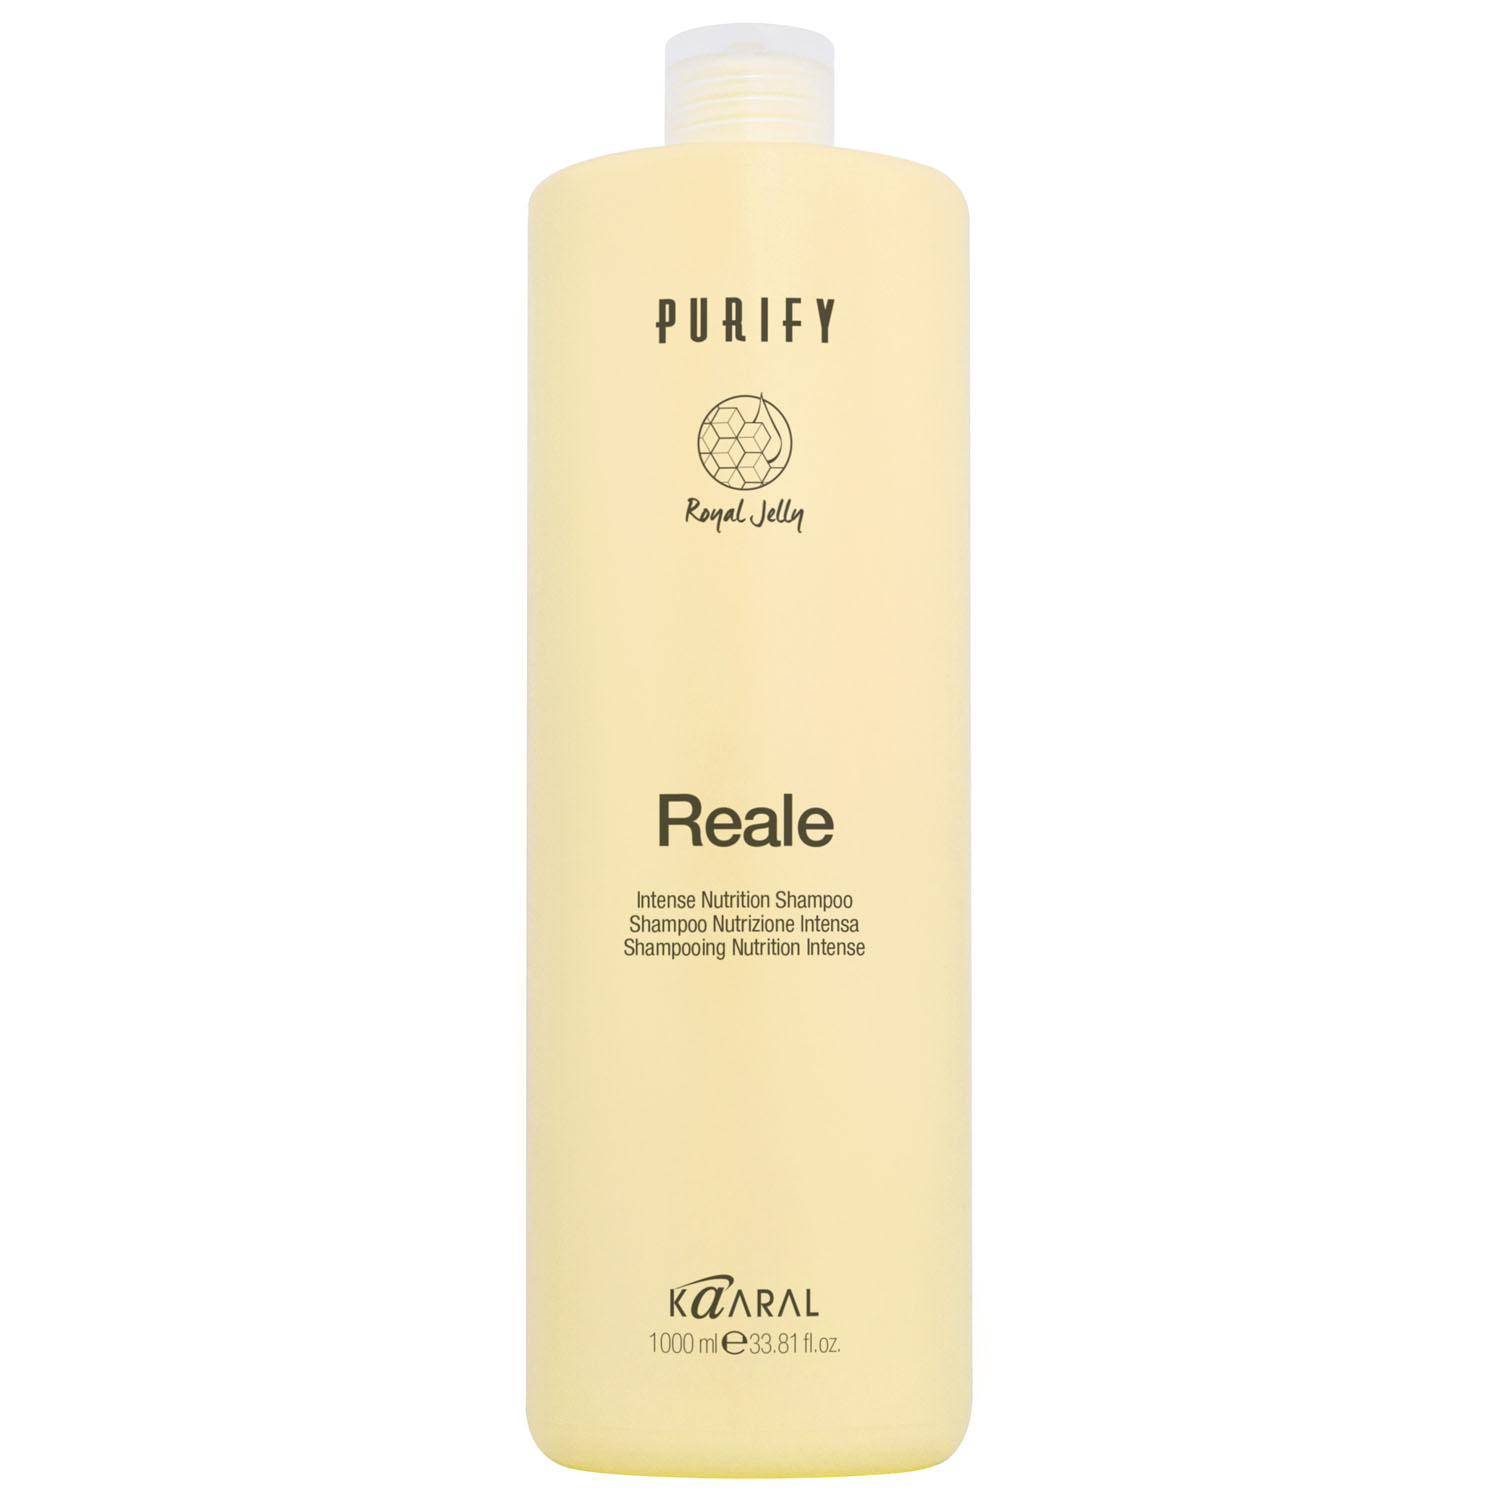 Kaaral Восстанавливающий шампунь для поврежденных волос Intense Nutrition Shampoo, 1000 мл (Kaaral, Purify) цена и фото